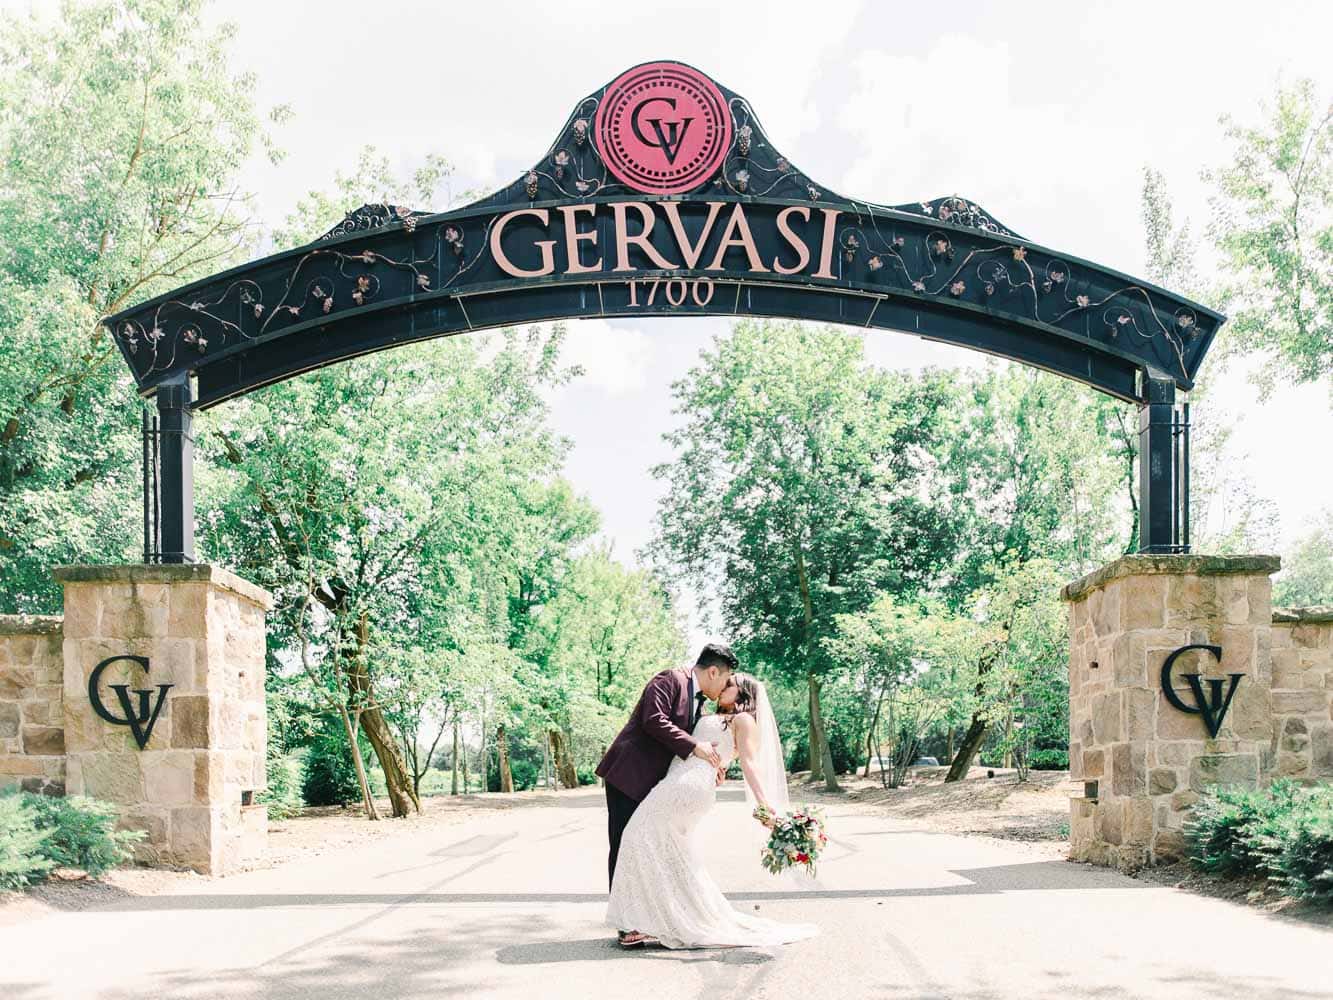 Gervasi Vineyard wedding, canton wedding photographer, Juliana Kaderbek photography, Cleveland wedding photographer